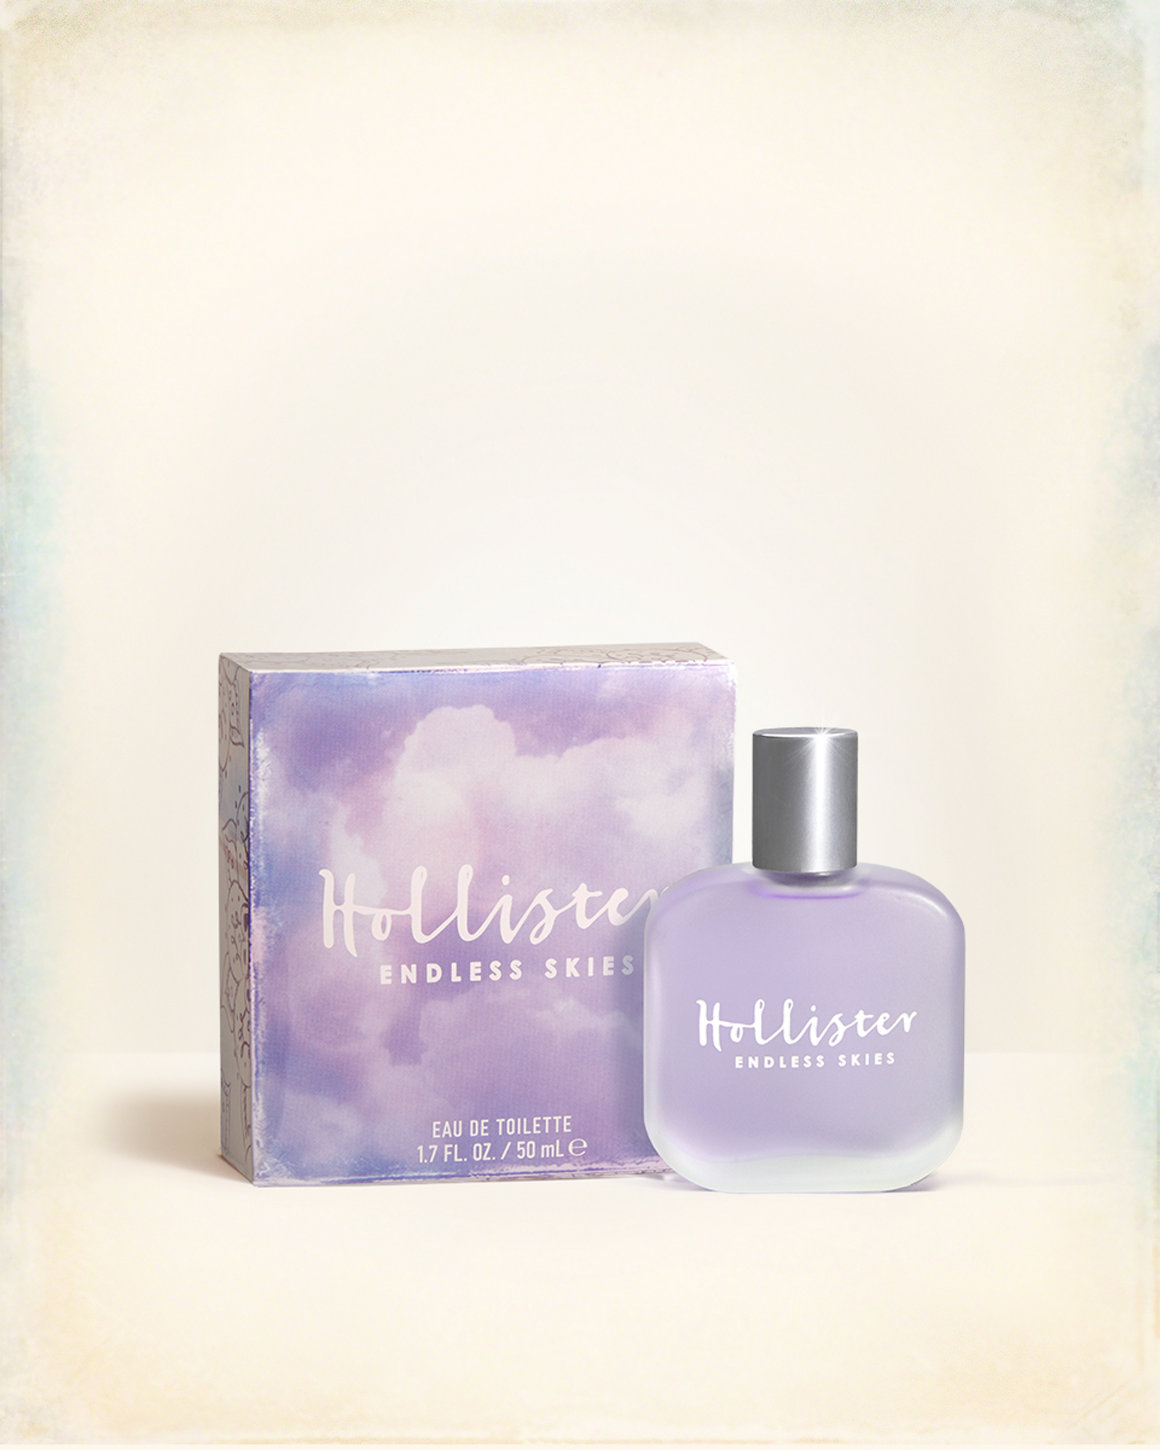 Endless Skies Hollister perfume - a 